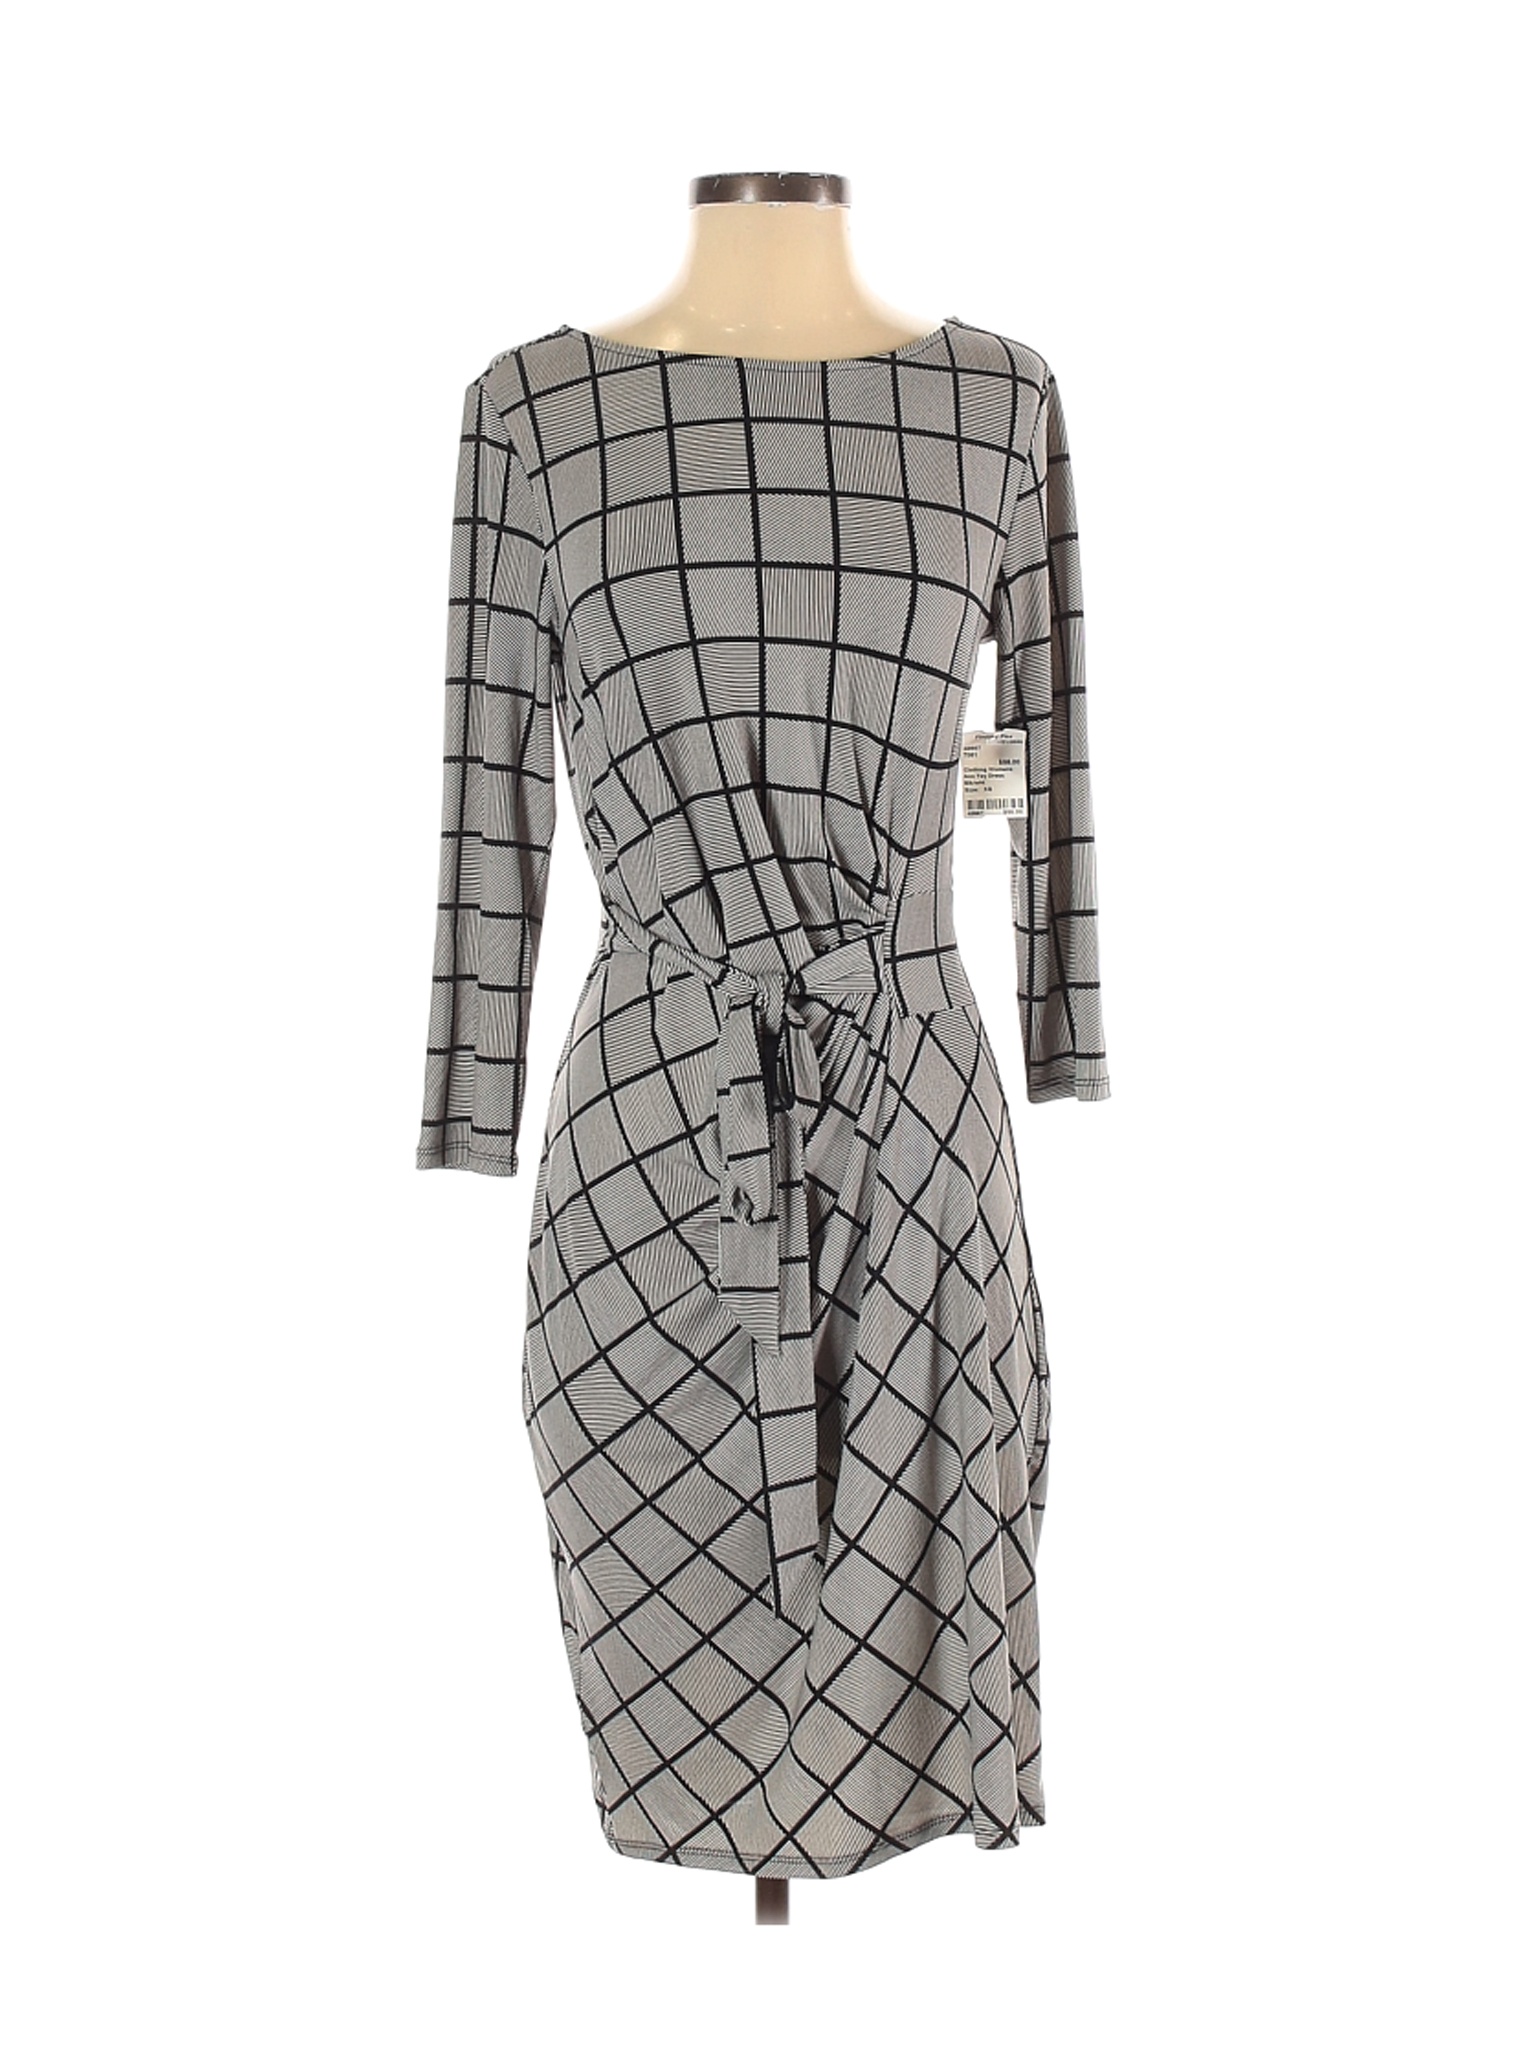 NWT Ann Taylor Factory Women Gray Casual Dress XS | eBay